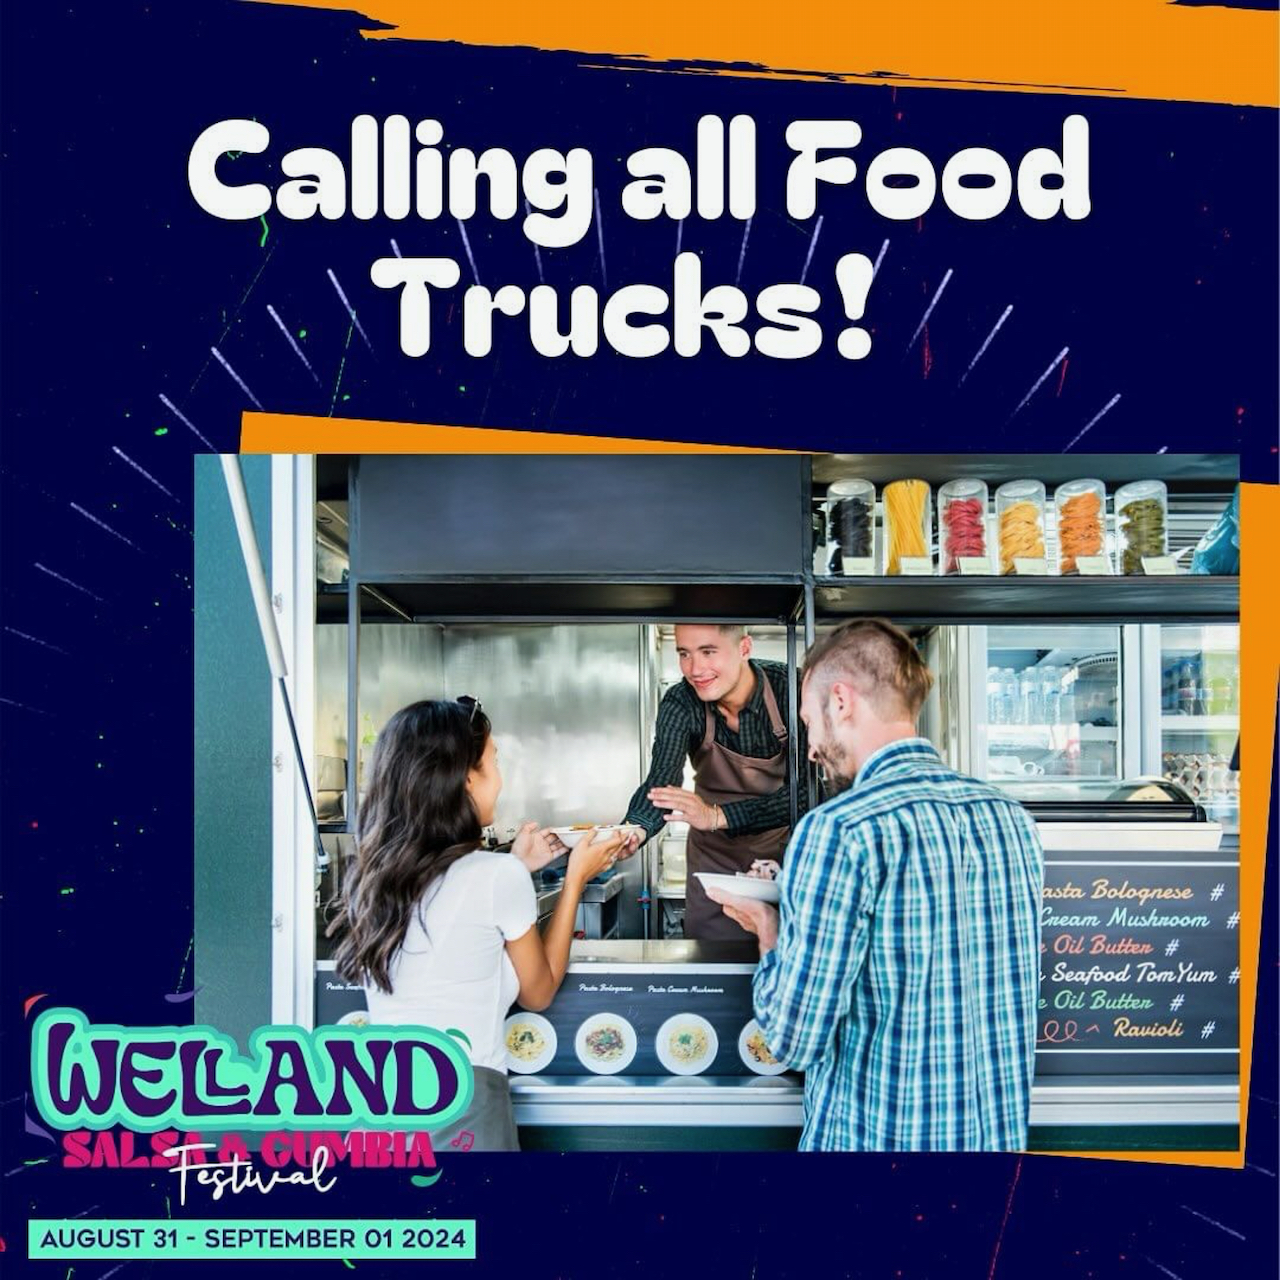 Calling All Food Trucks to the Welland Salsa & Cumbia Festival!